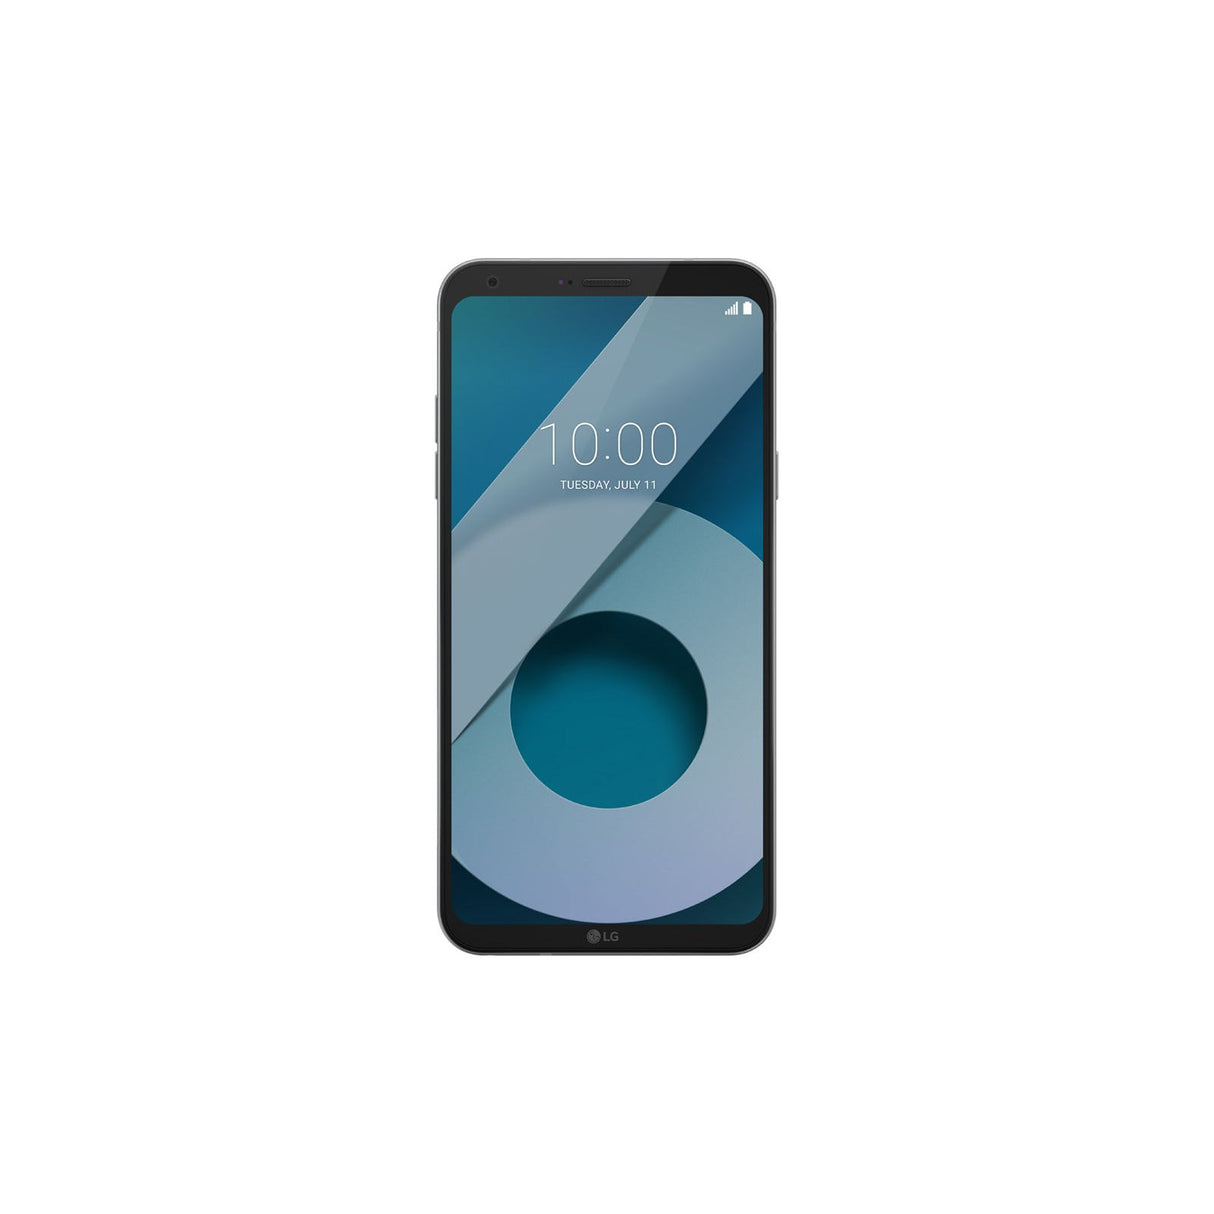 LG Q6 - 32 GB - Astro Black - Unlocked - GSM